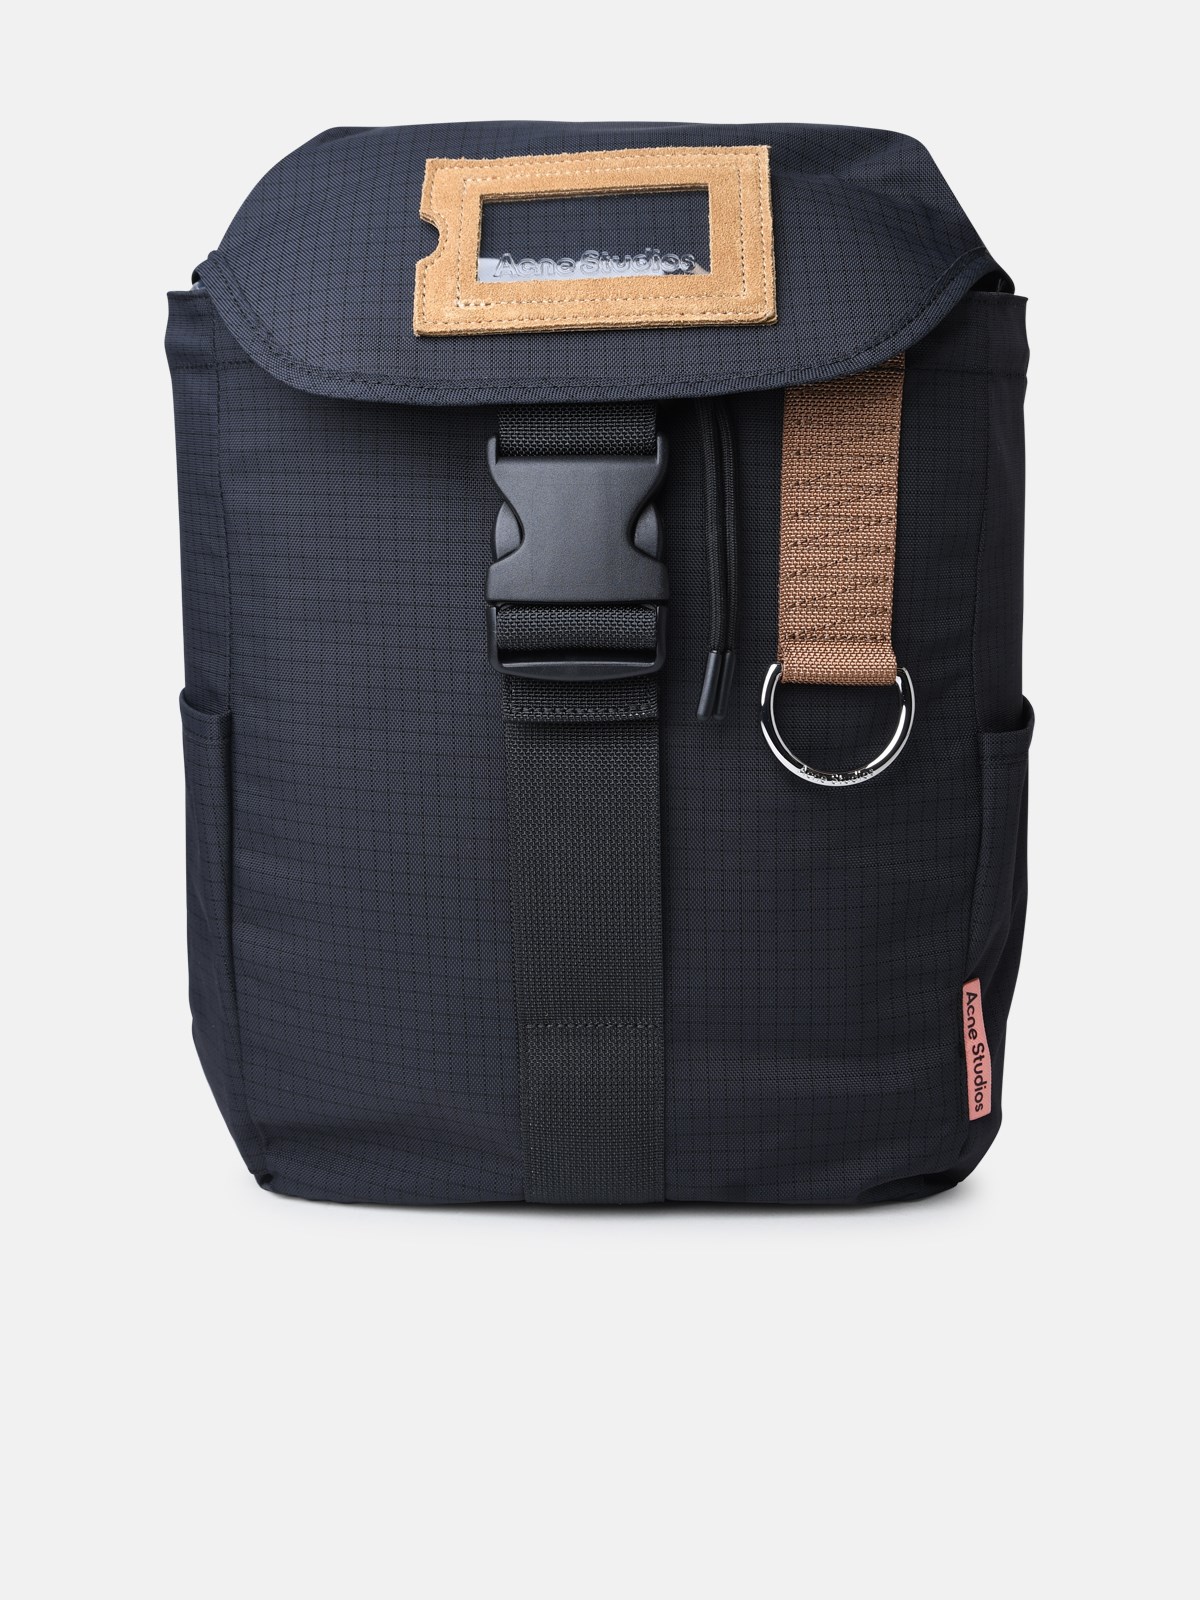 Acne Studios Black Nylon Backpack